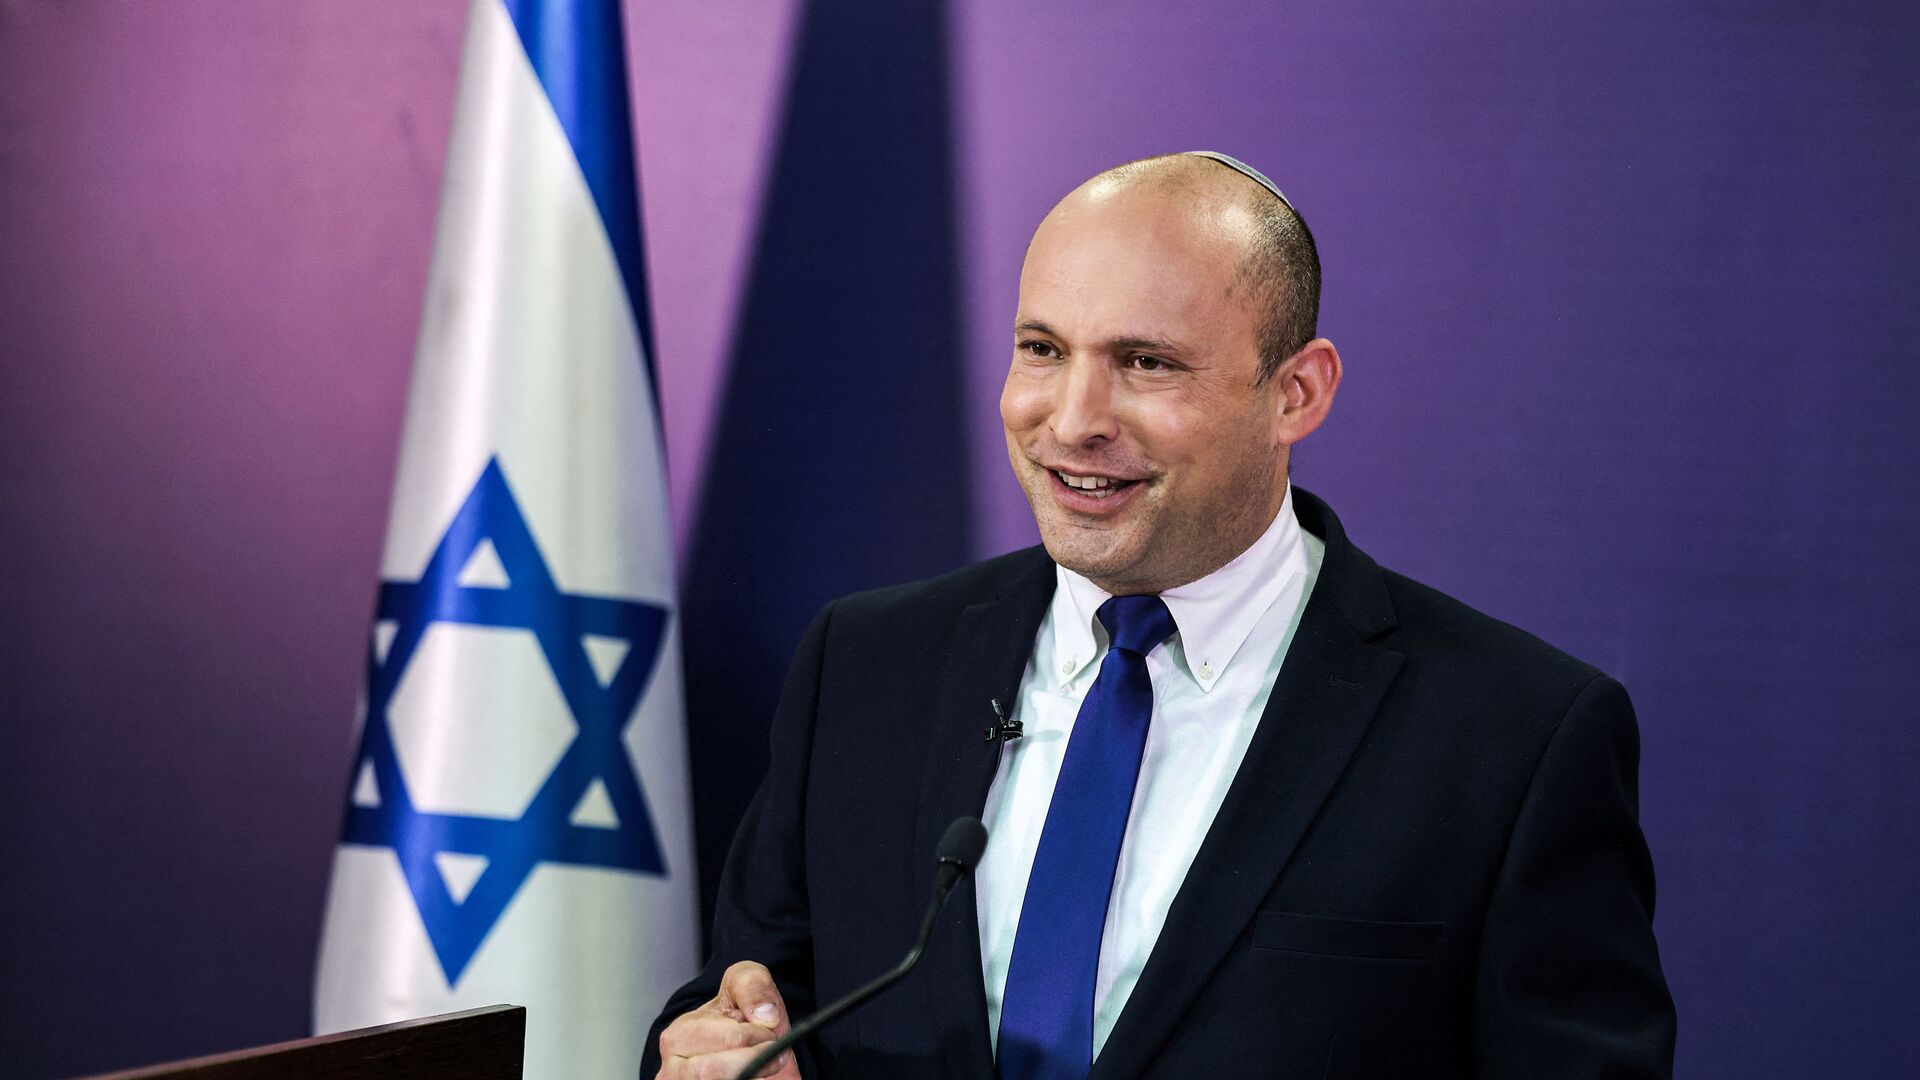 Naftali Bennett Becomes Israel's New Prime Minister, Ending Netanyahu's 12-Year Tenure - Sputnik International, 1920, 13.06.2021